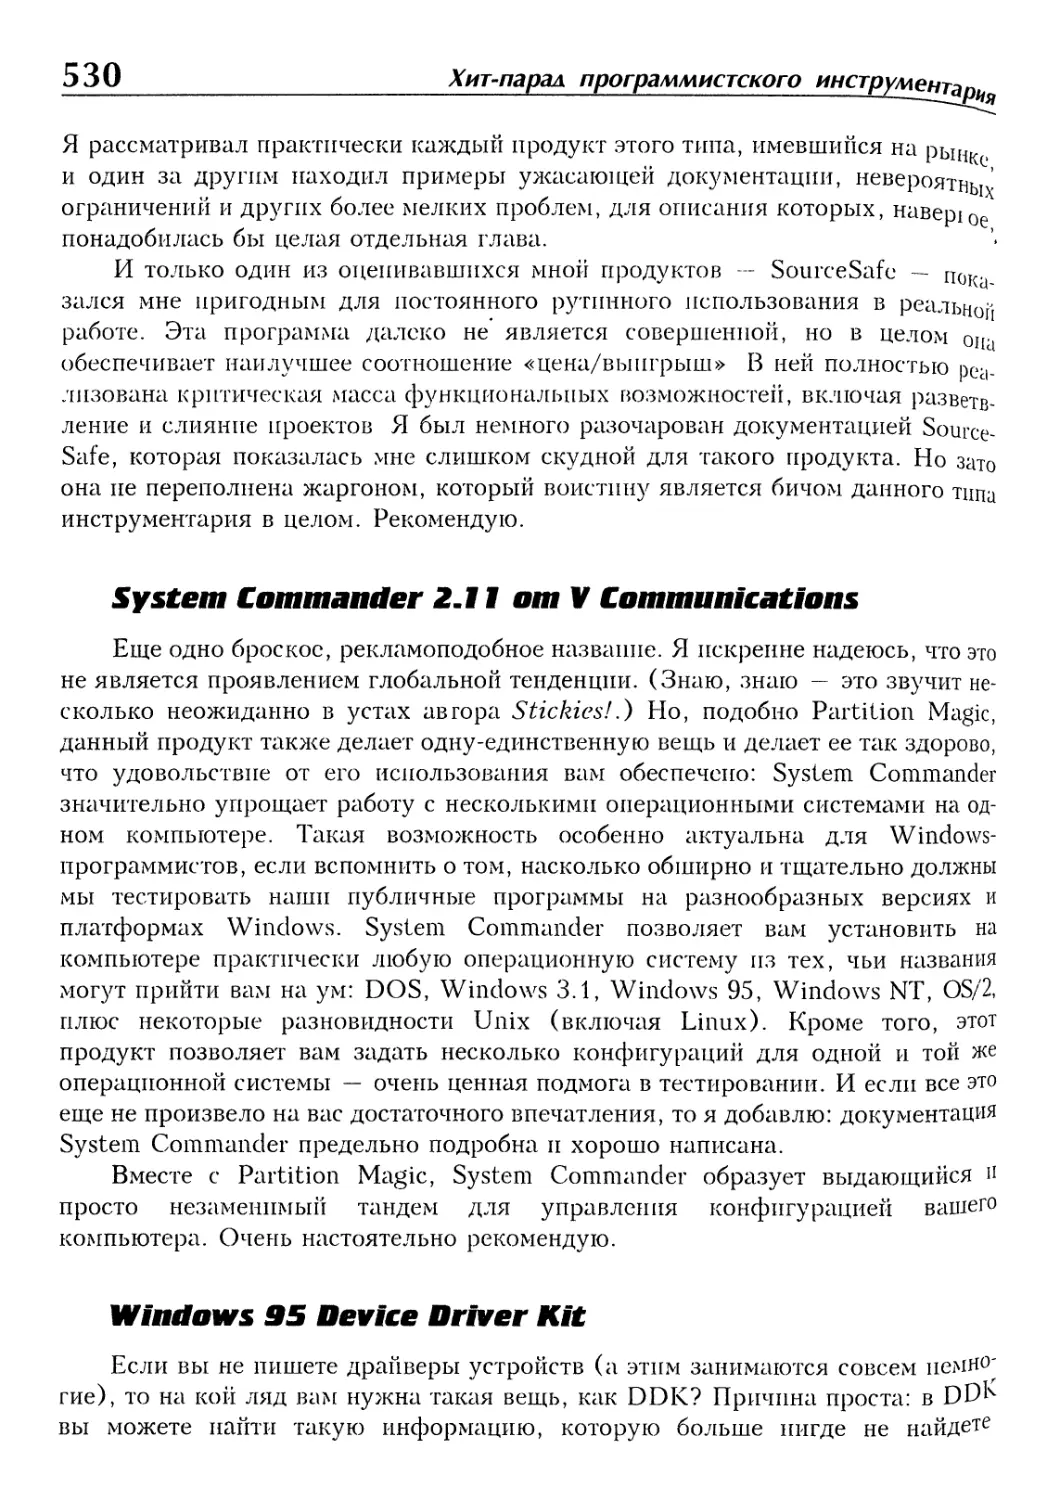 System Commander 2.11 от V Communications
Windows 95 Device Driver Kit